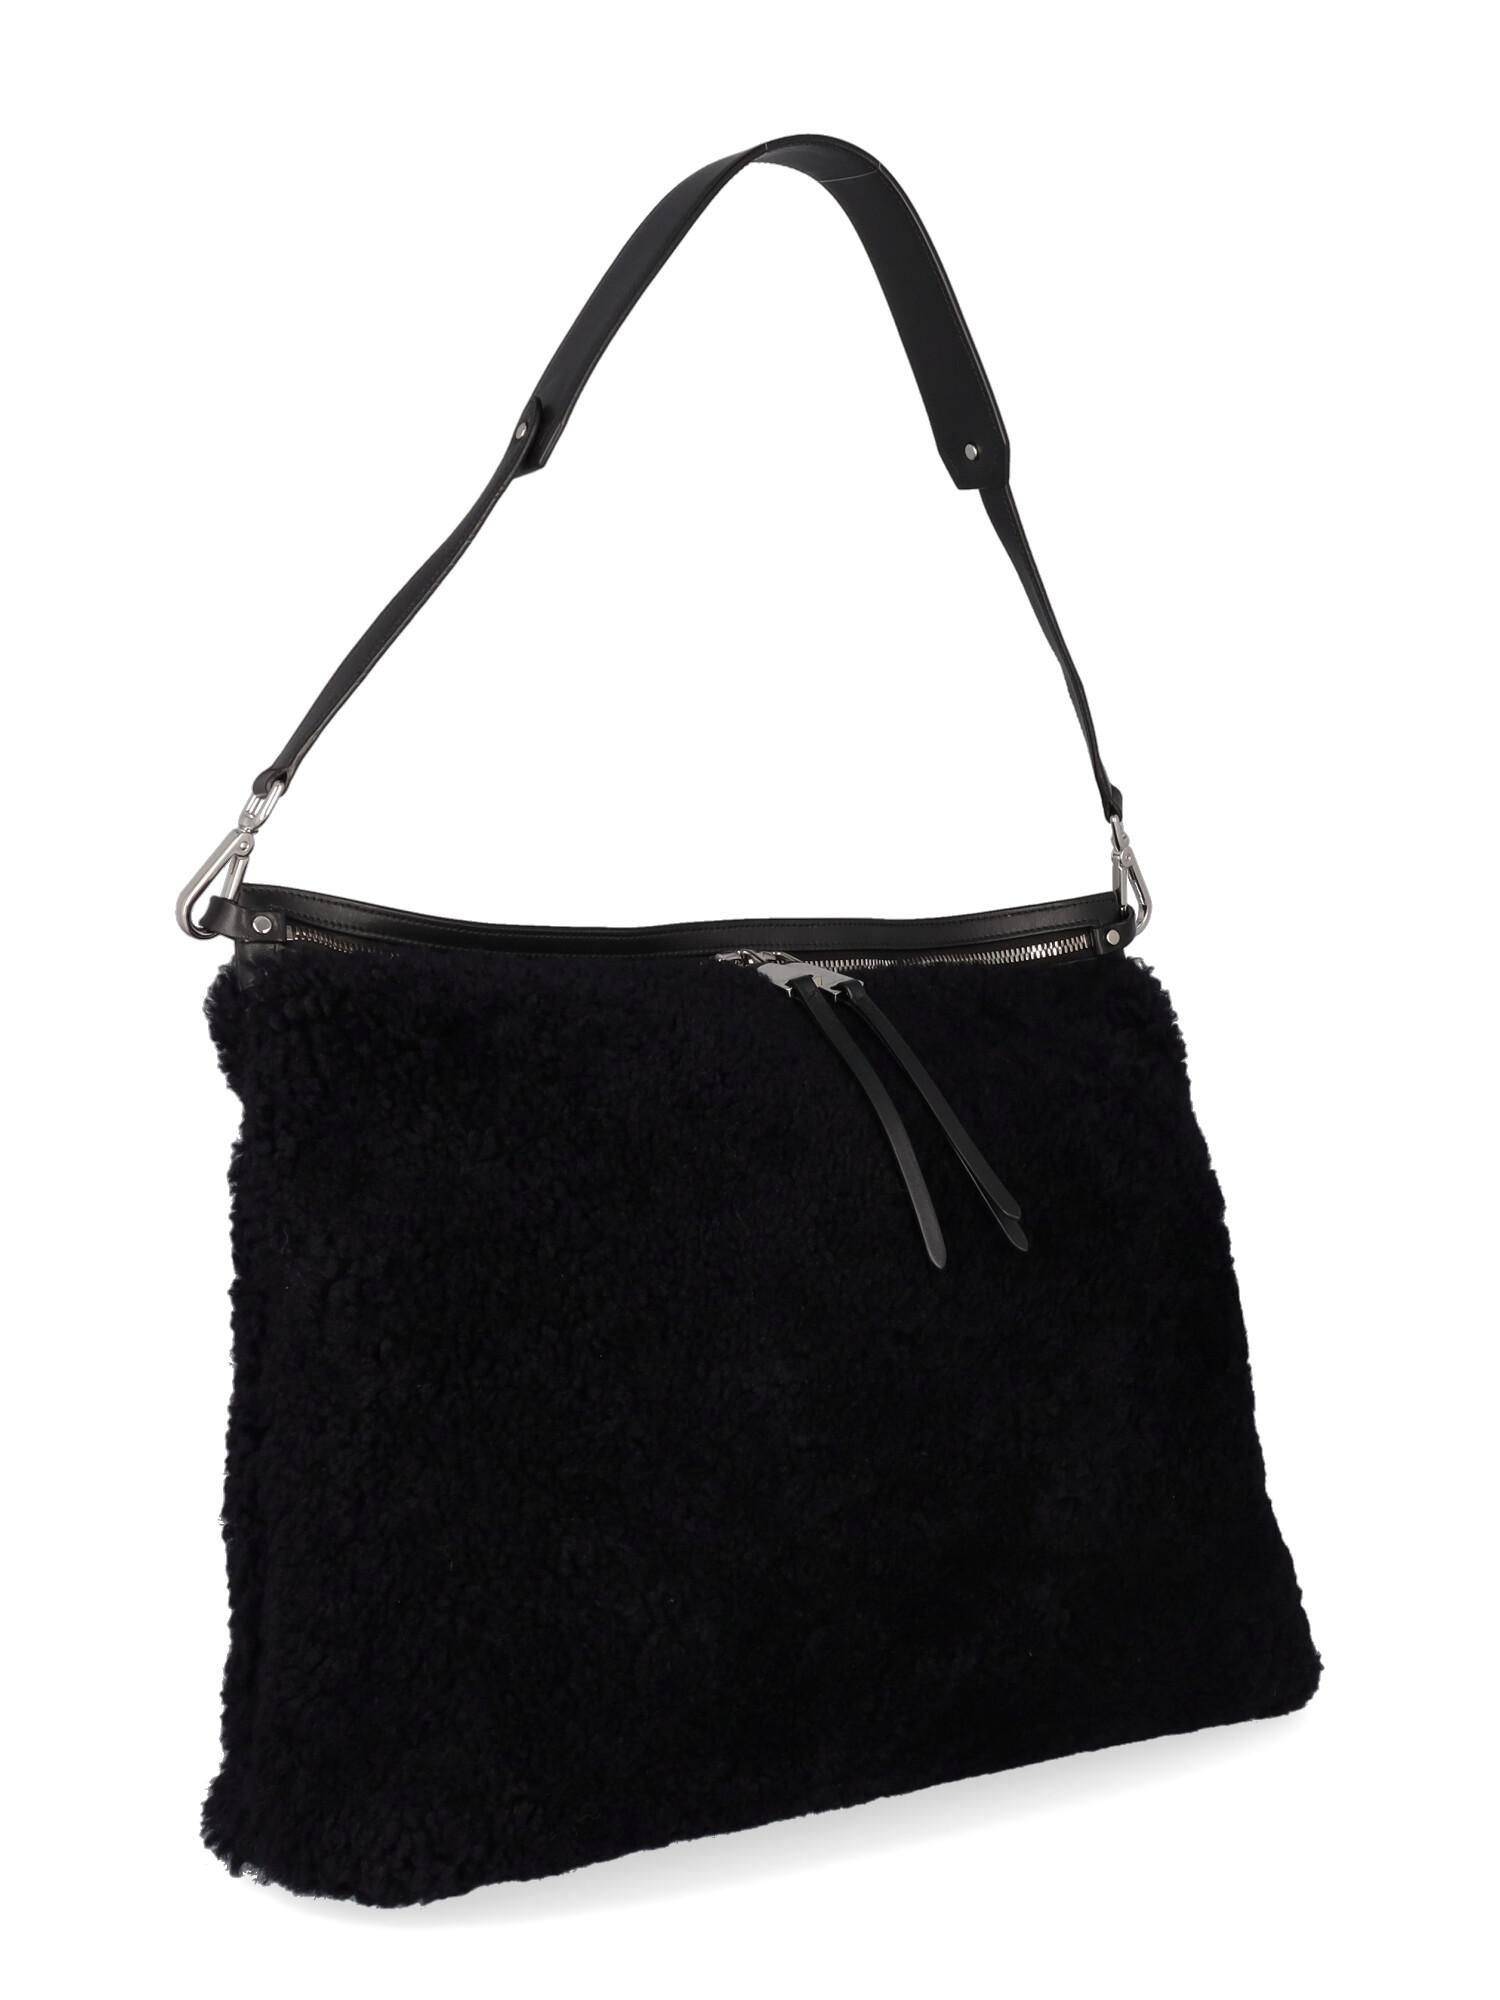 Jil Sander Women Handbags Black Leather  In Good Condition For Sale In Milan, IT